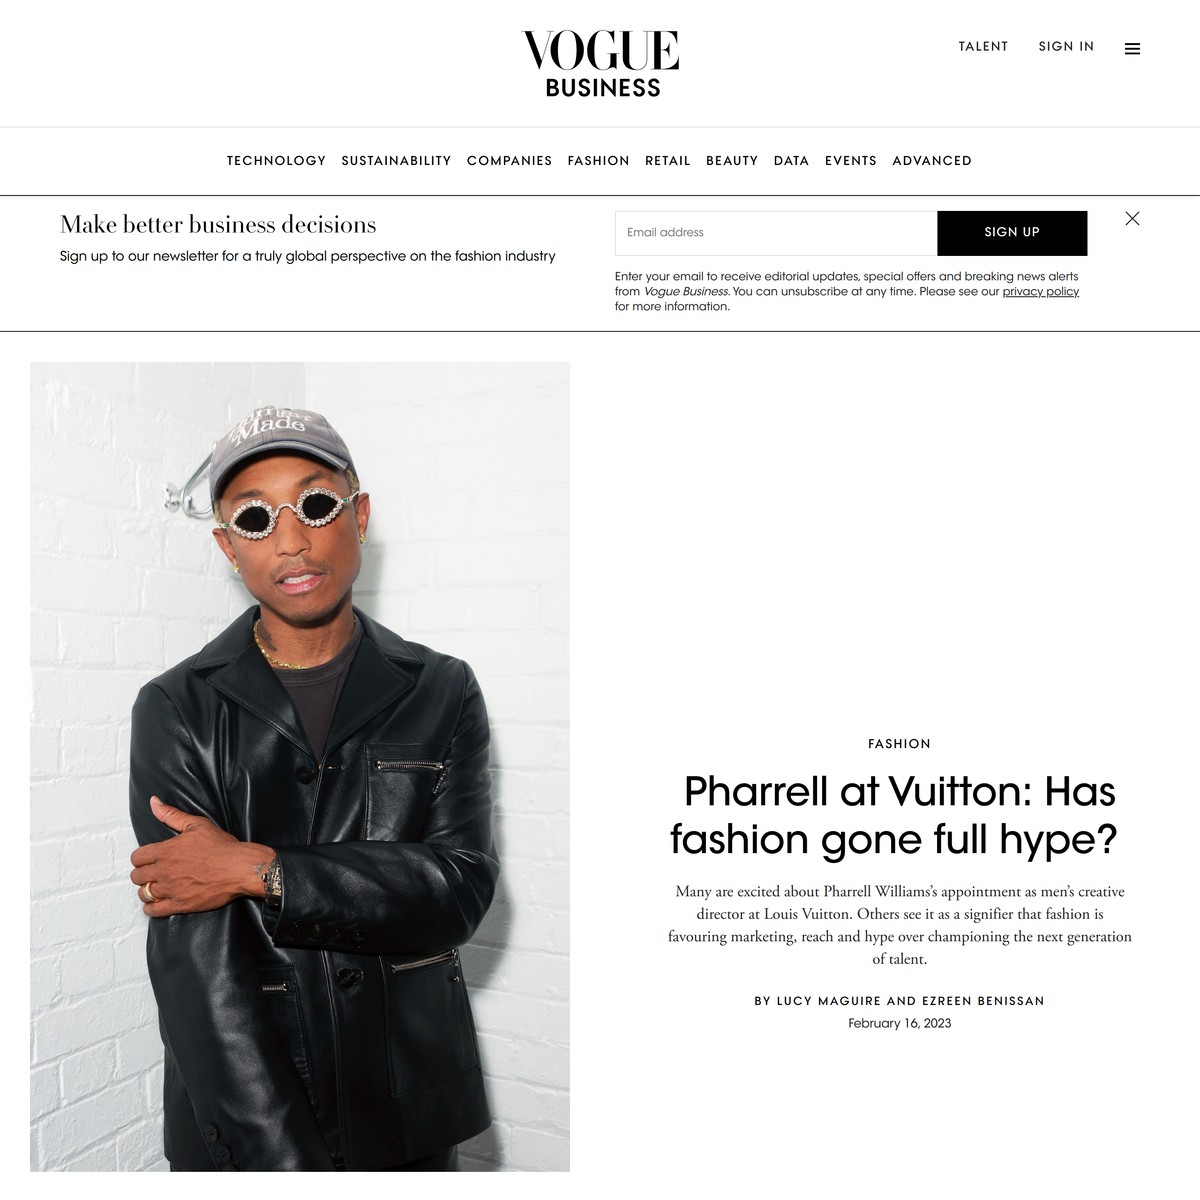 Pharrell at Vuitton: Has fashion gone full hype?